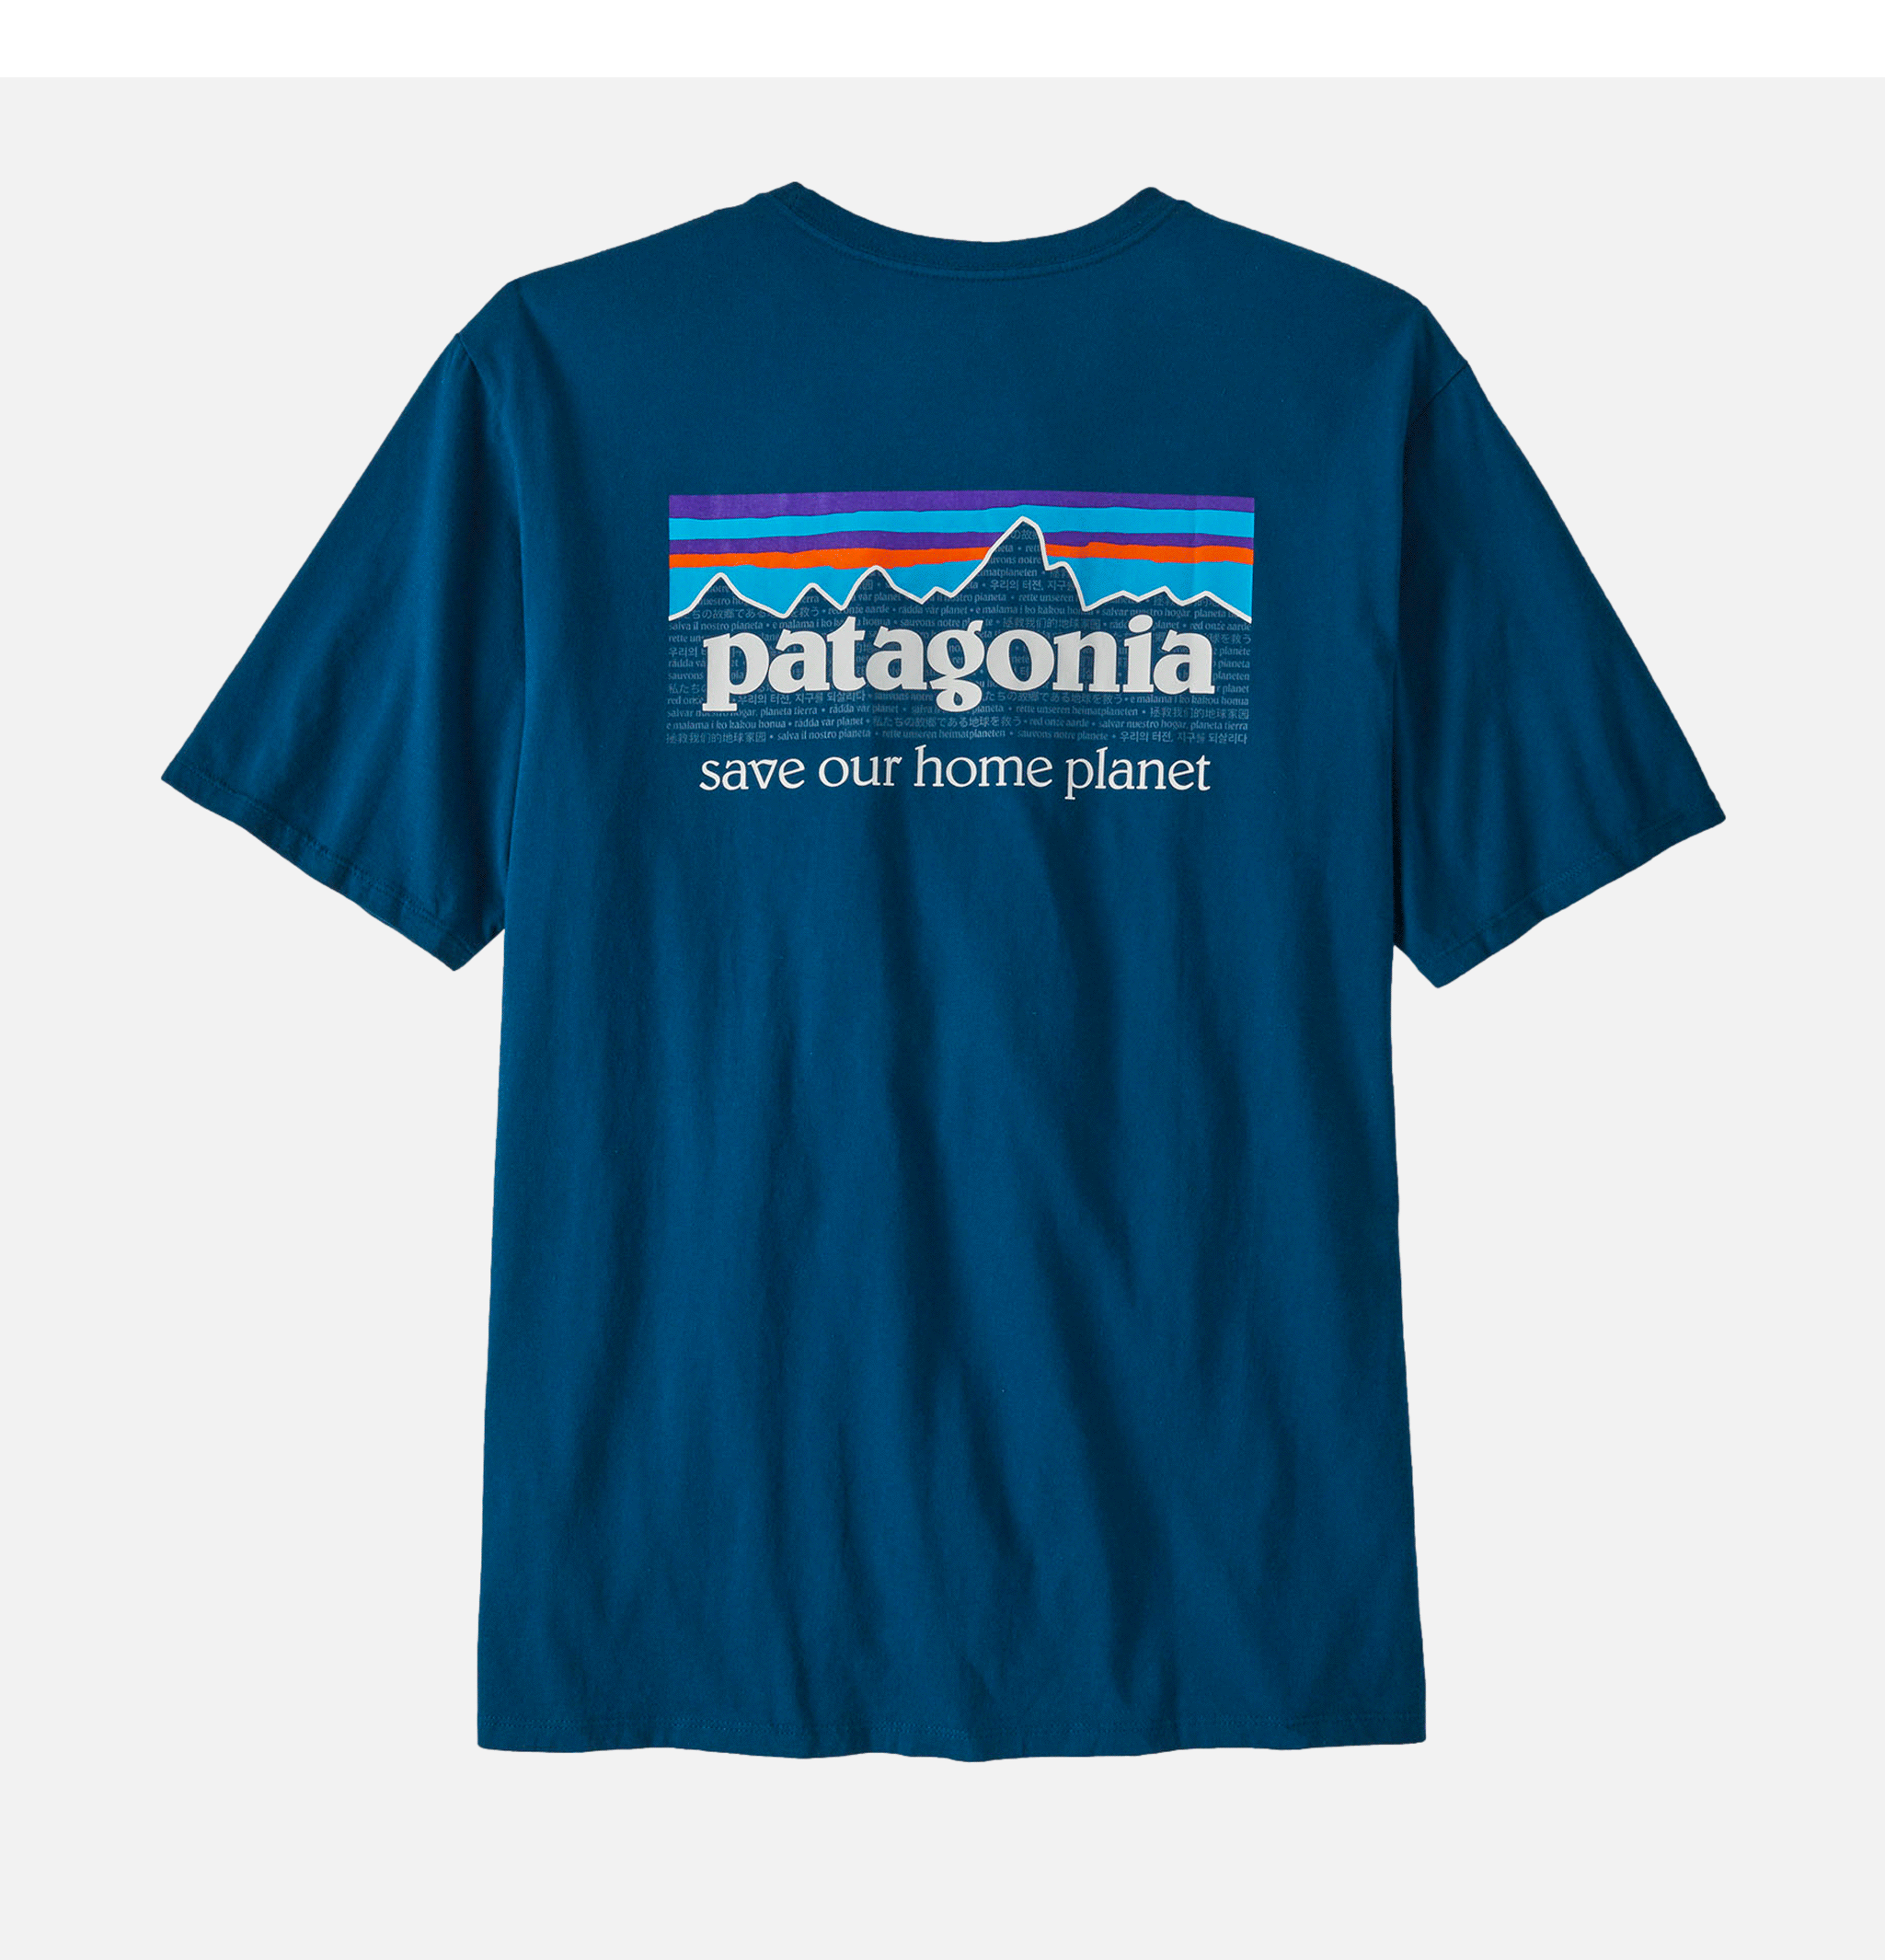 Patagonia P6 Mission Lagom Blue